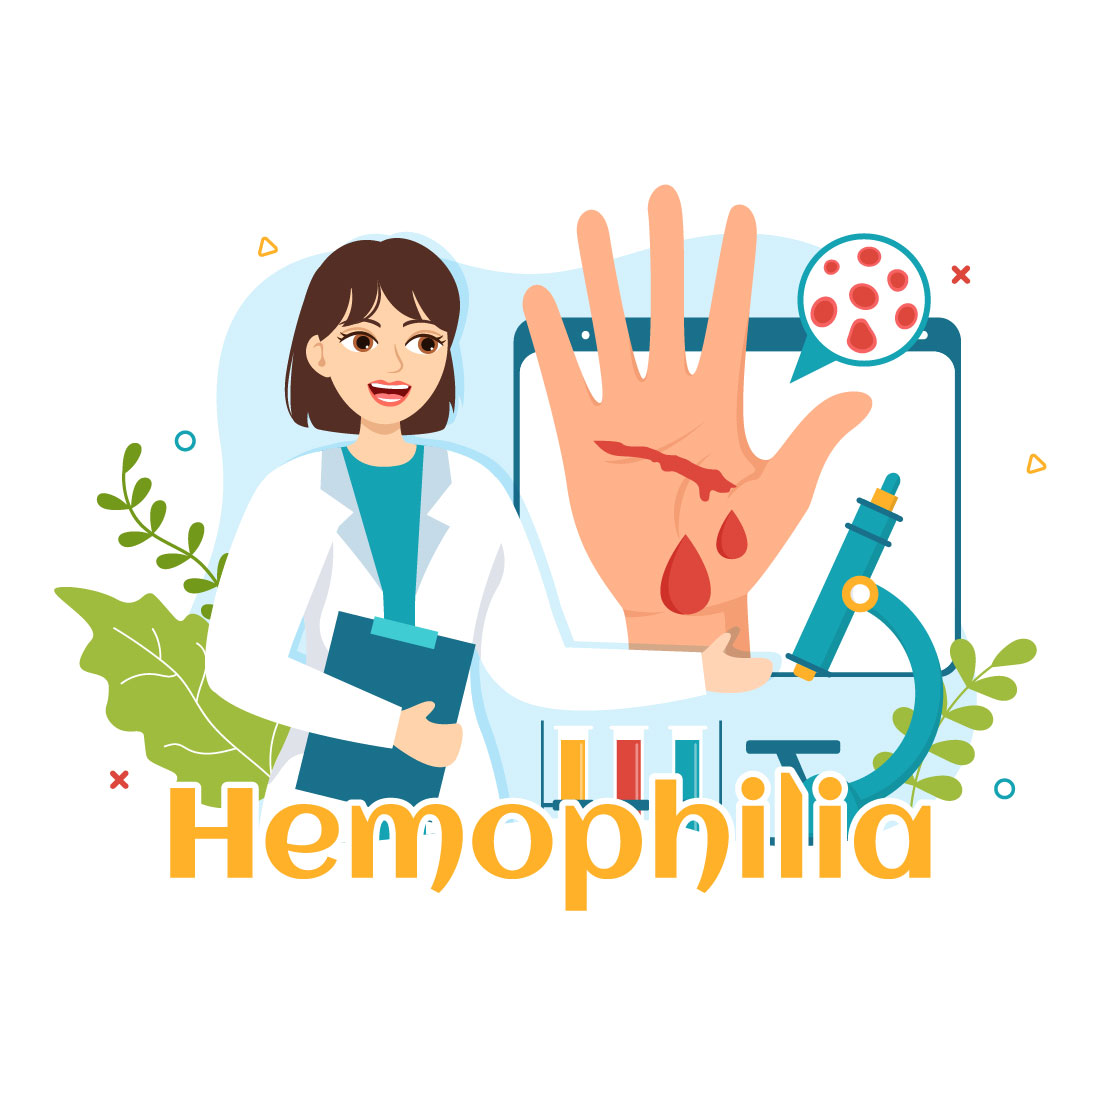 13 Hemophilia Disease Illustration cover image.